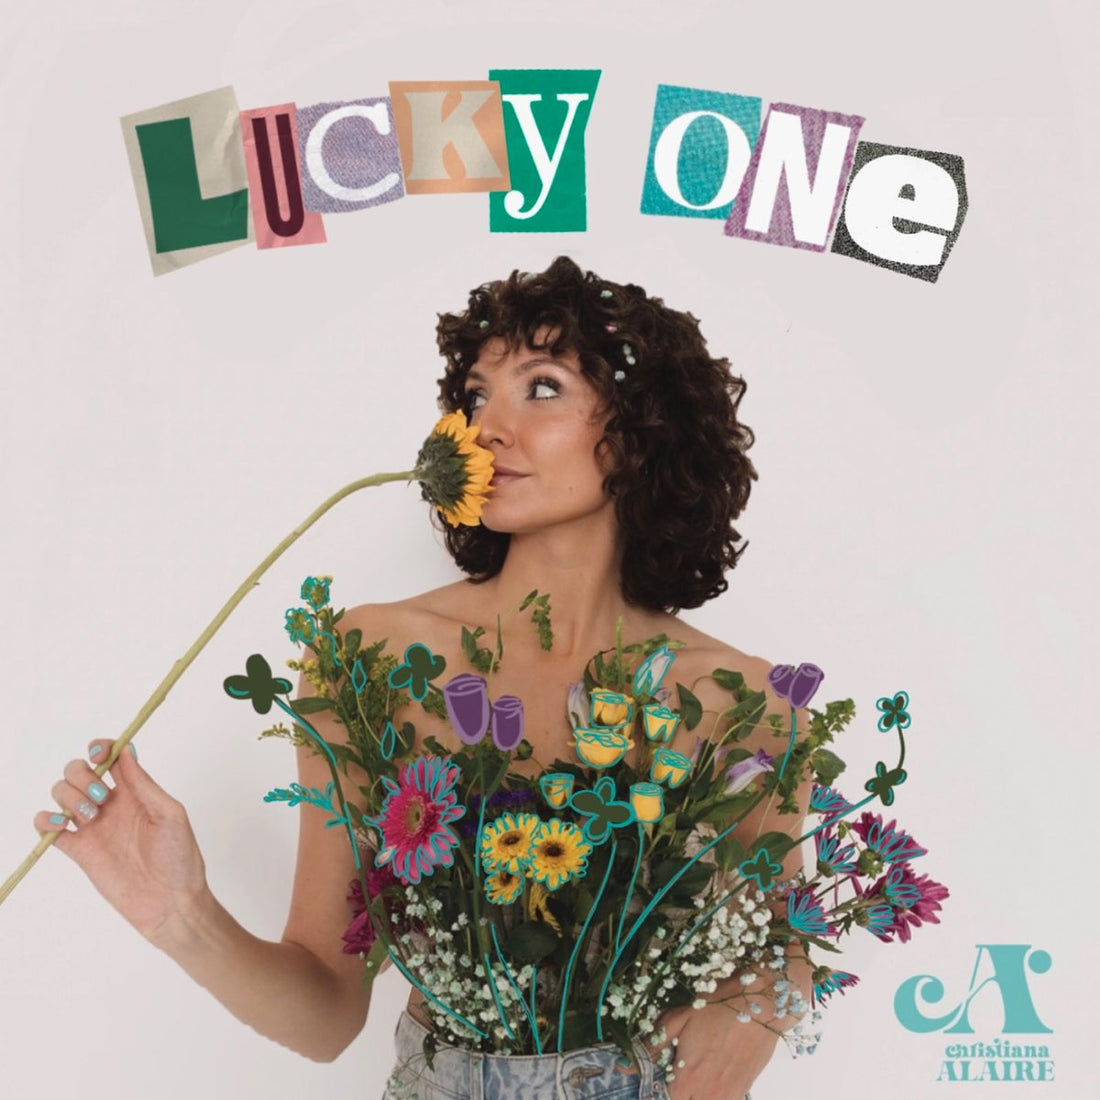 Christiana Alaire - "Lucky One"